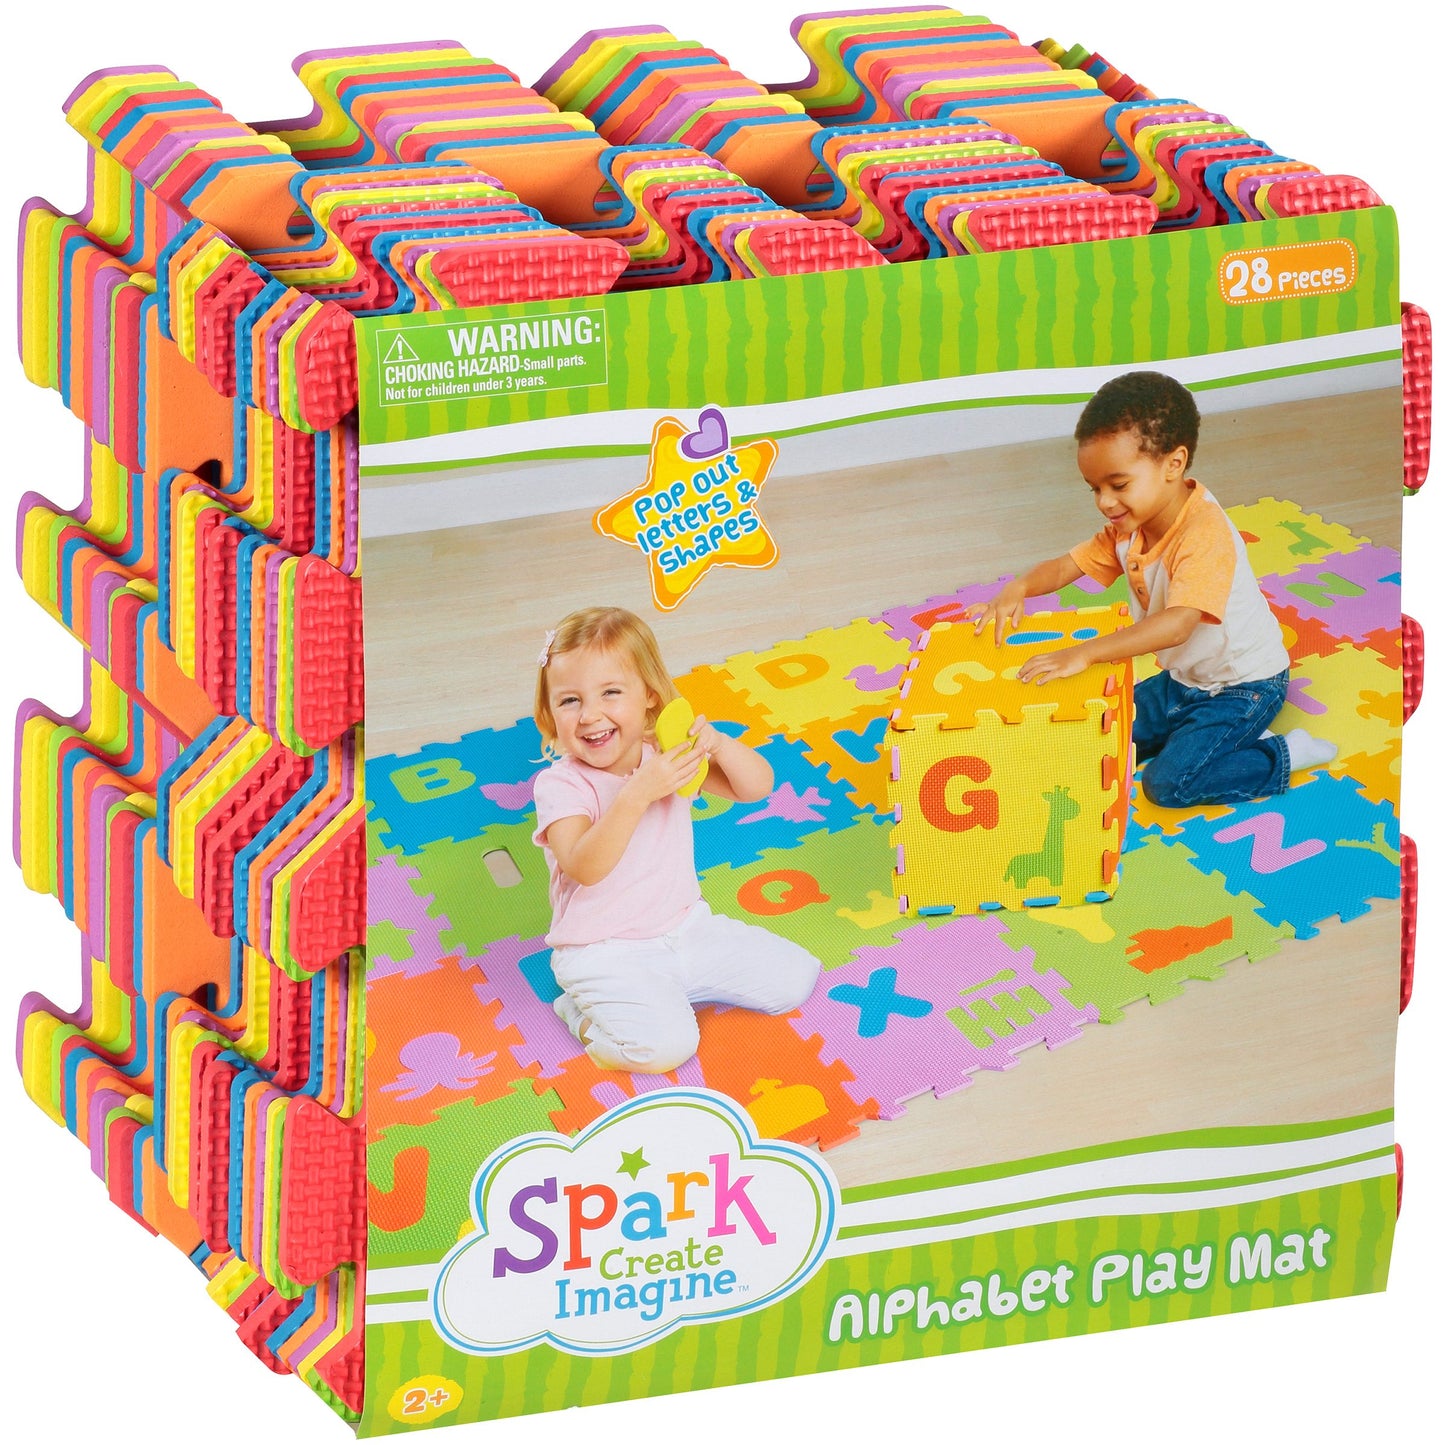 Spark Create Imagine Alphabet Play Mat, 2+ Years, 28 Pieces